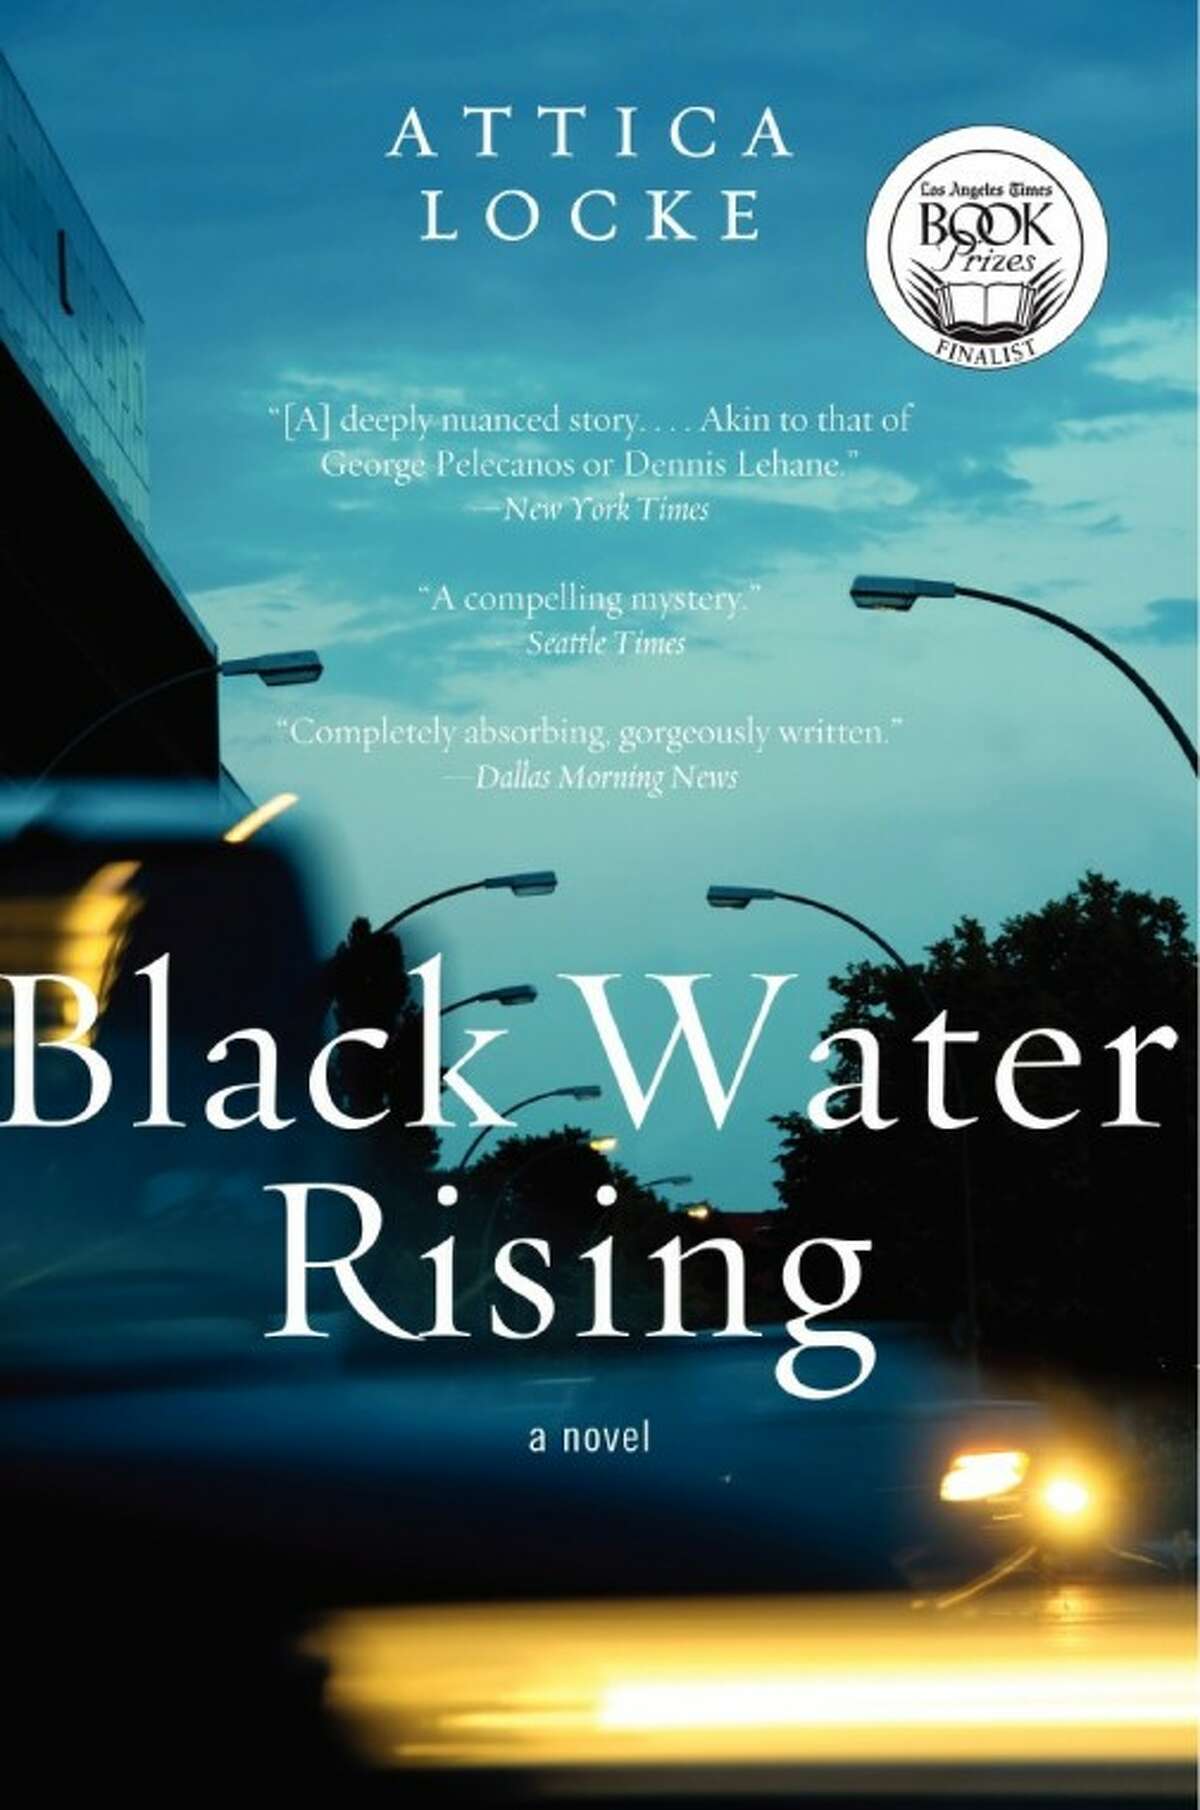 "Black Water Rising," by author Attica Locke.